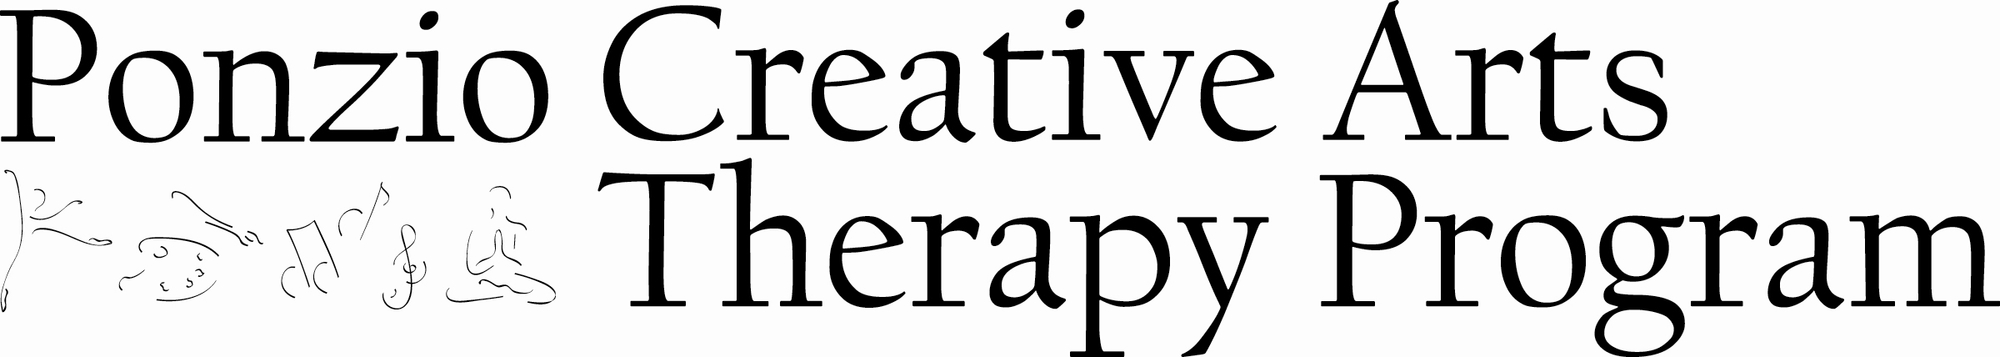 Ponzio Creative Arts Therapy Program logo